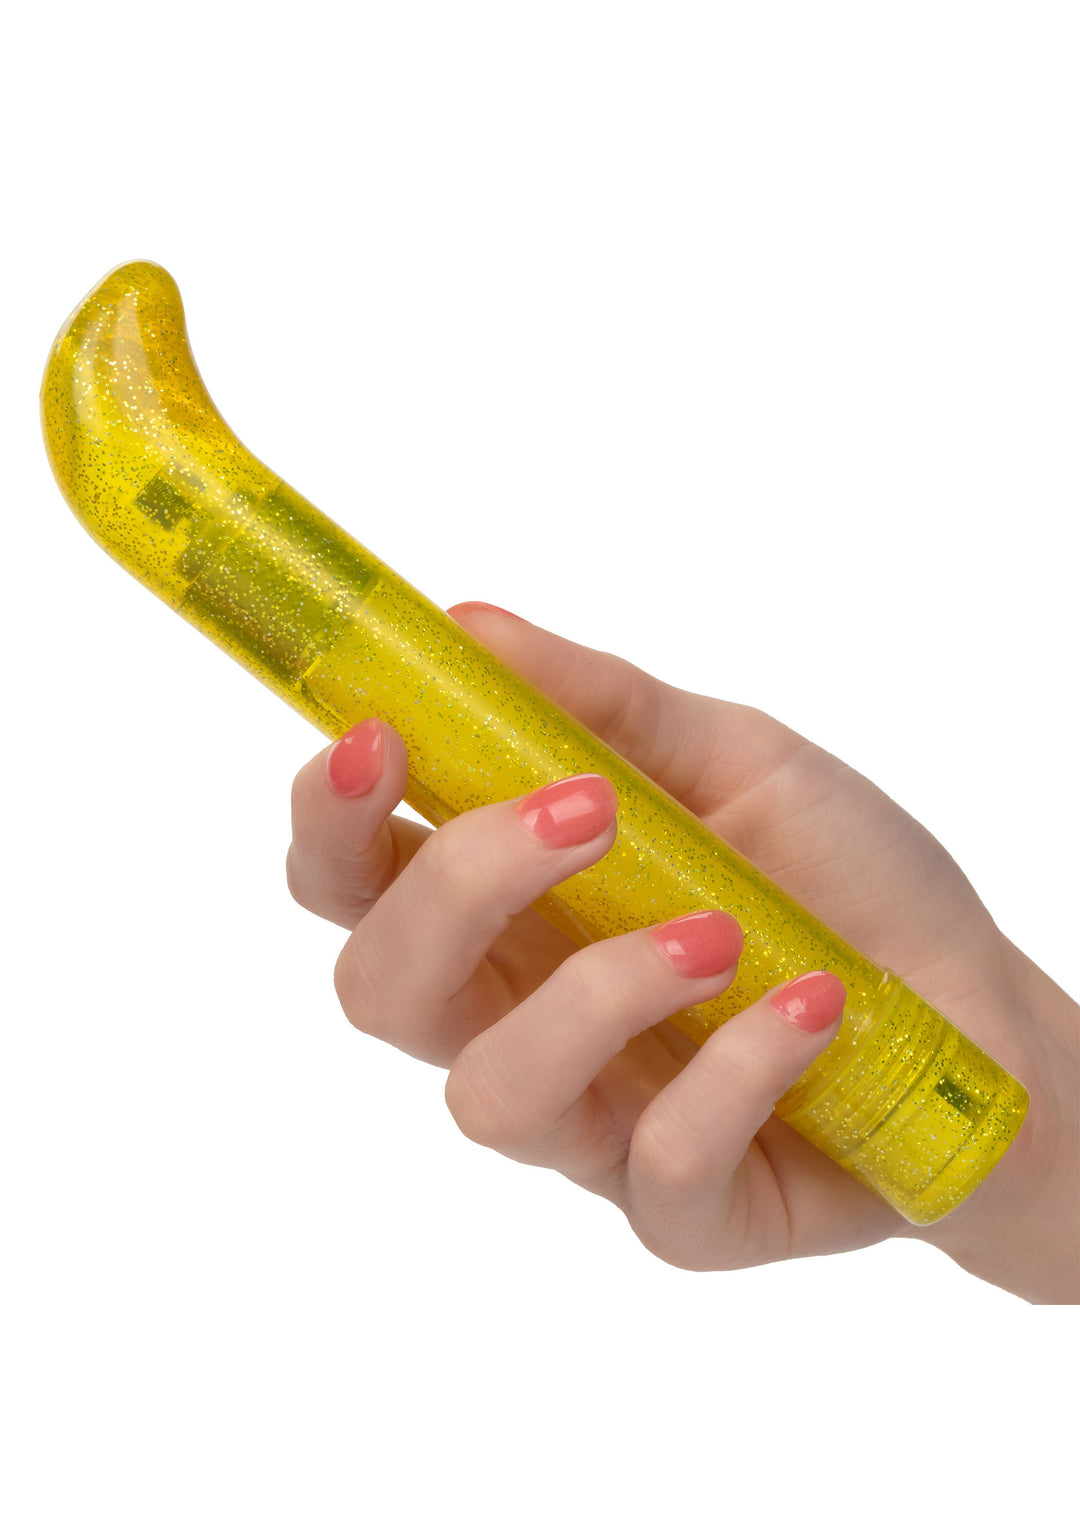 Yellow Sparkle Slim G-vibe - 15cm